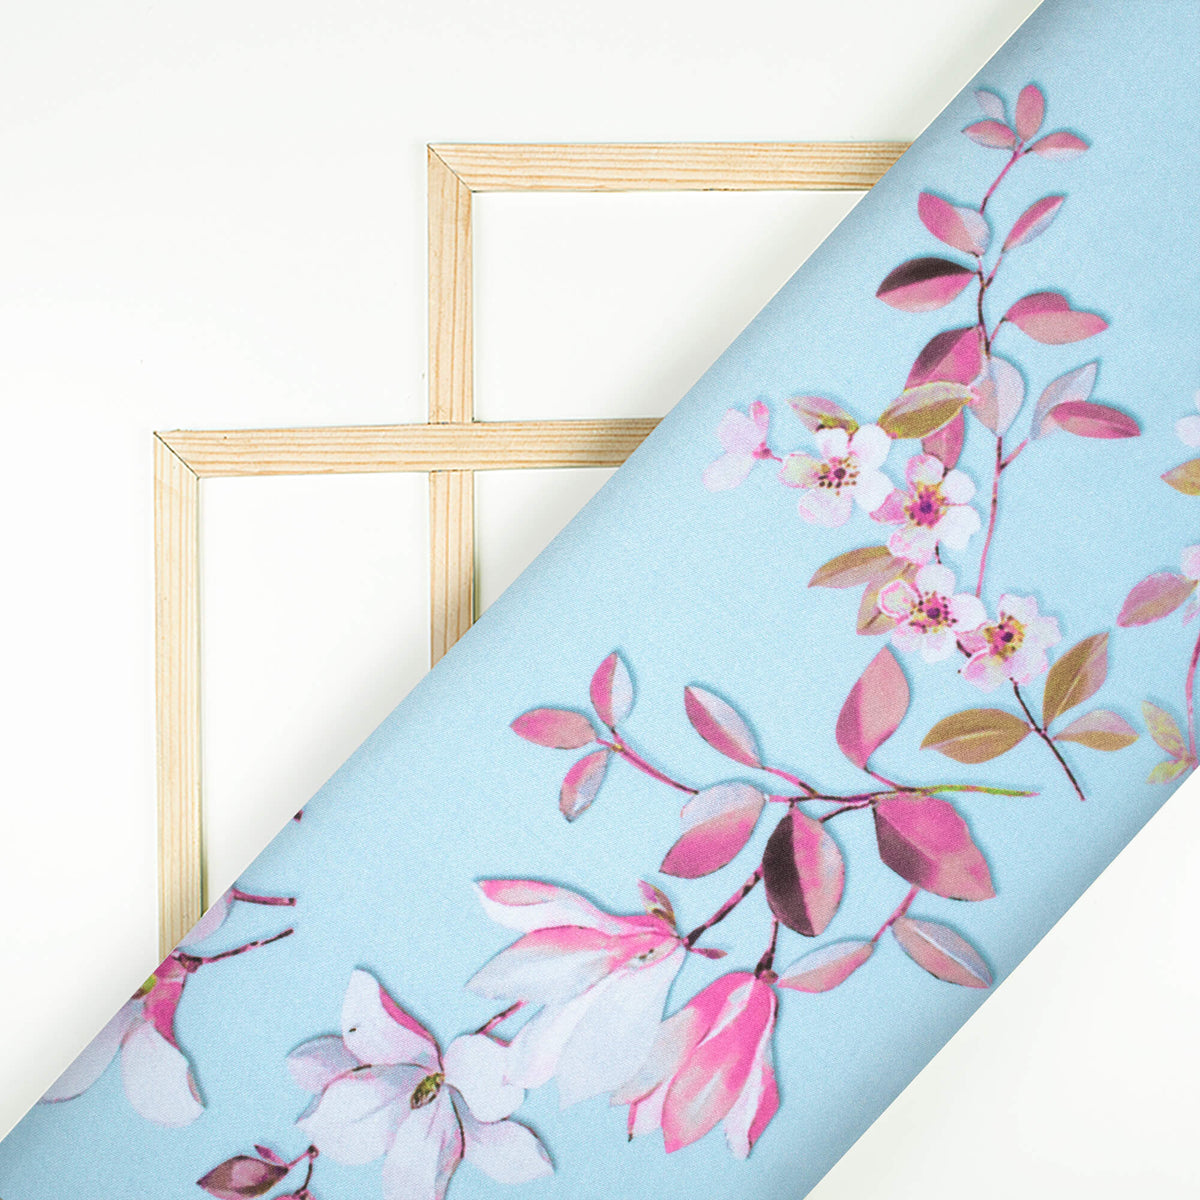 Blizzard Blue And Pink Floral Pattern Digital Print Premium Lush Satin Fabric